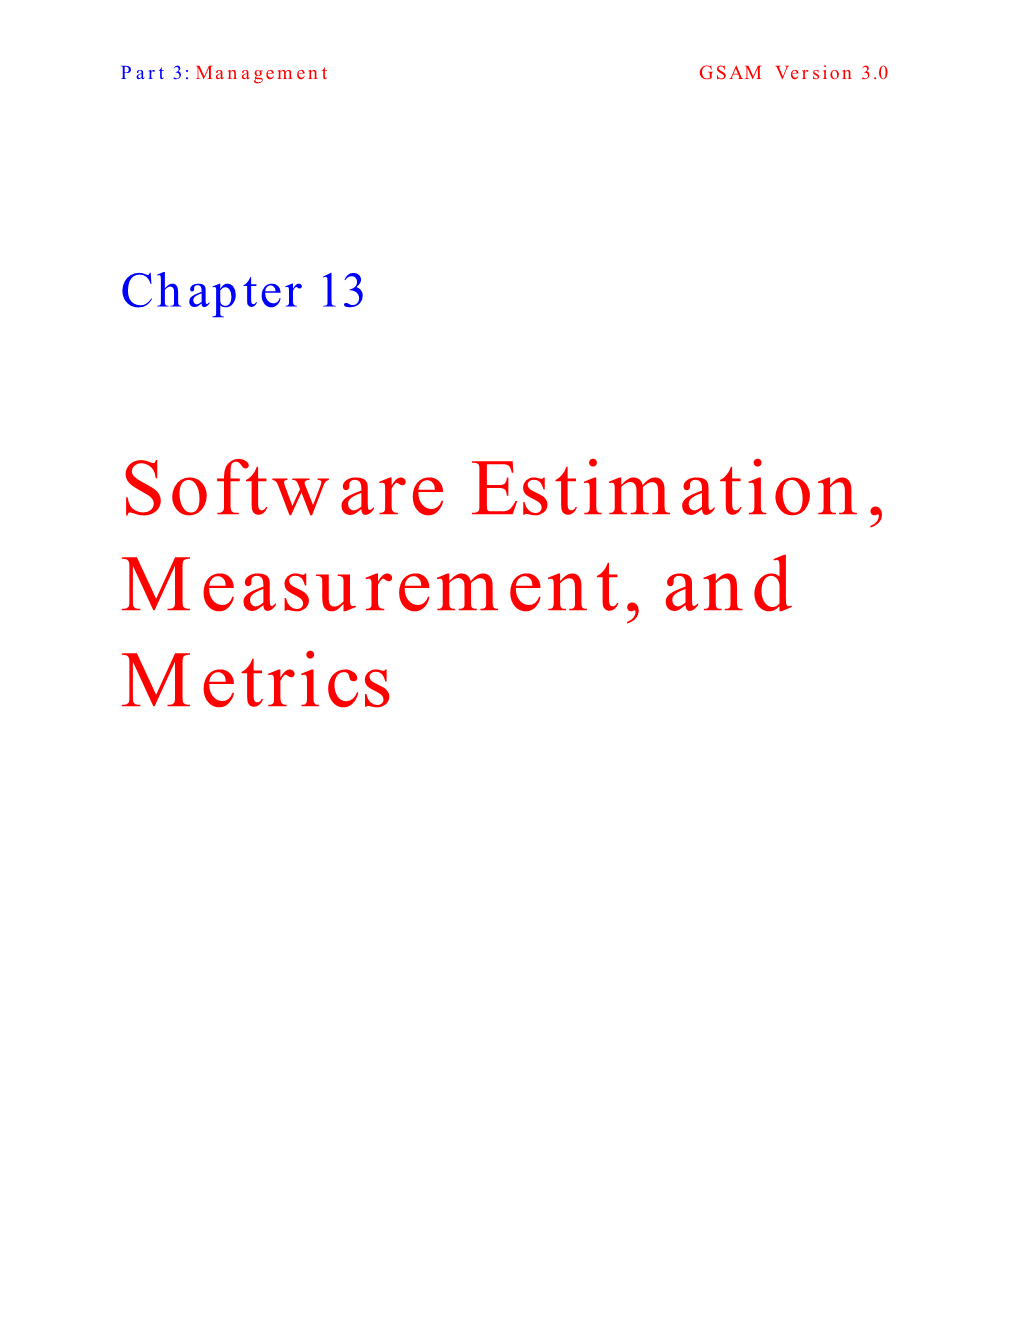 Software Estimation, Measurement, and Metrics Chapter 13: Software Estimation, Measurement & Metrics GSAM Version 3.0